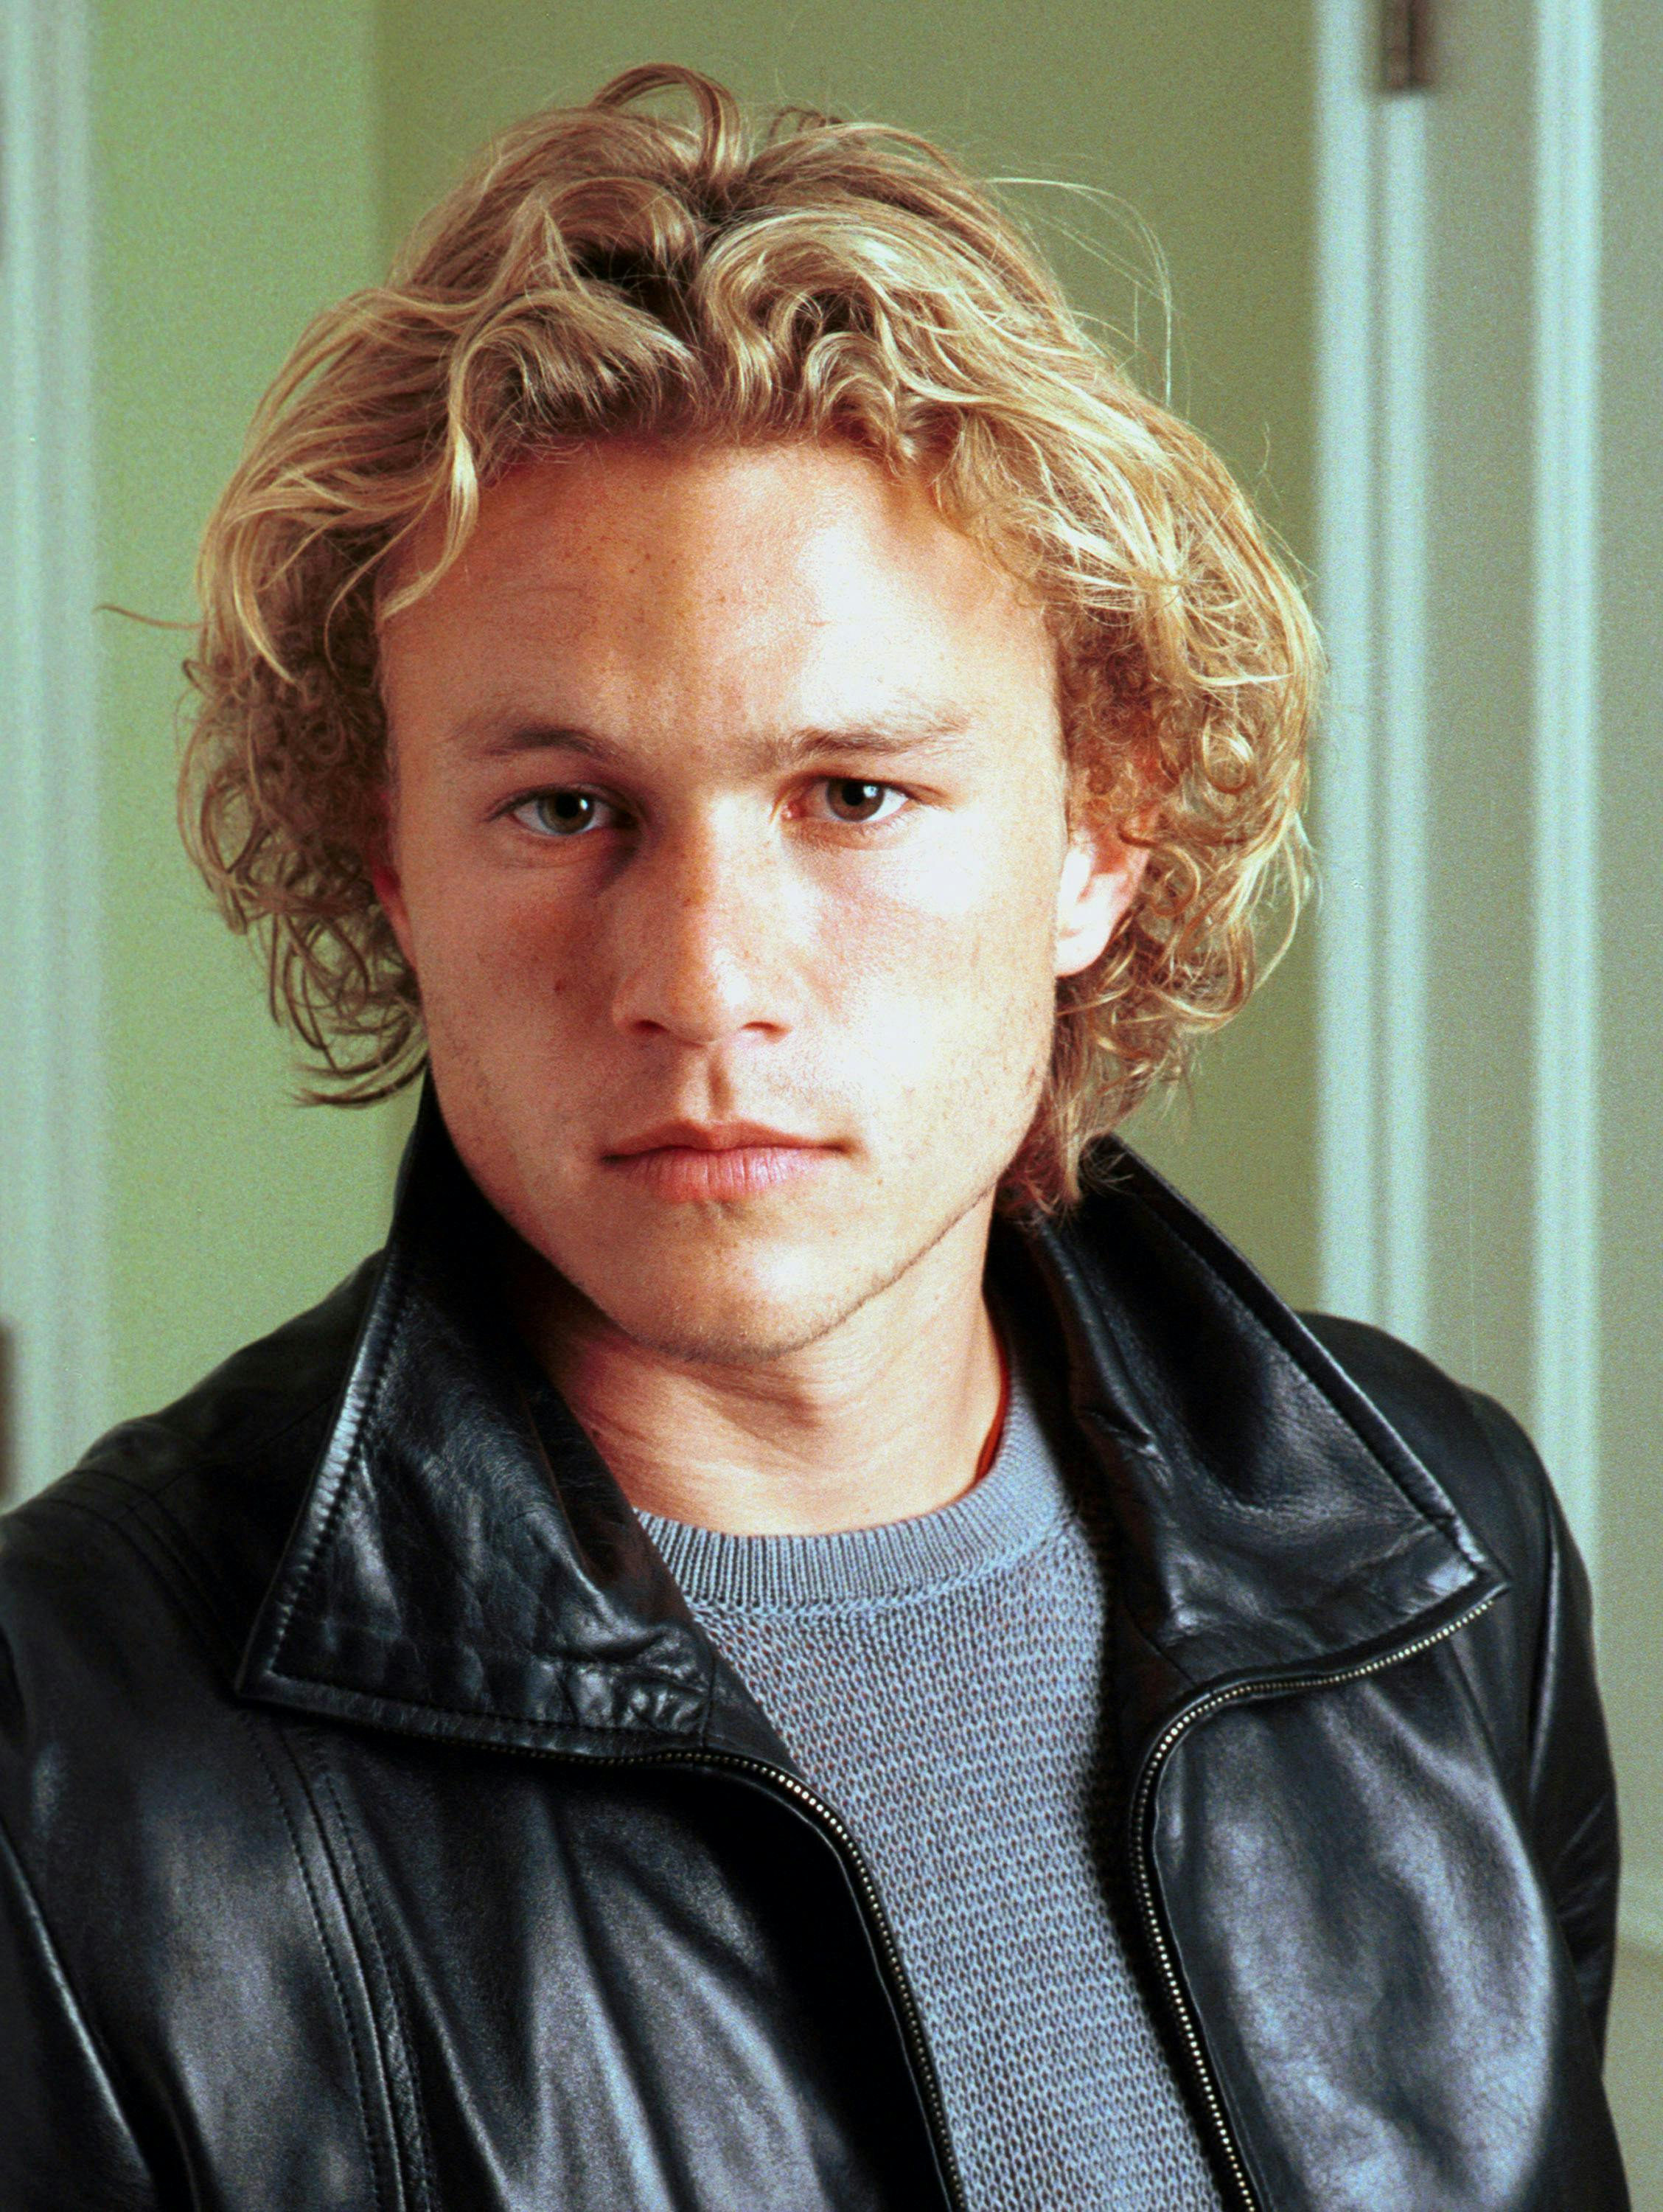 Young Heath Ledger photo.